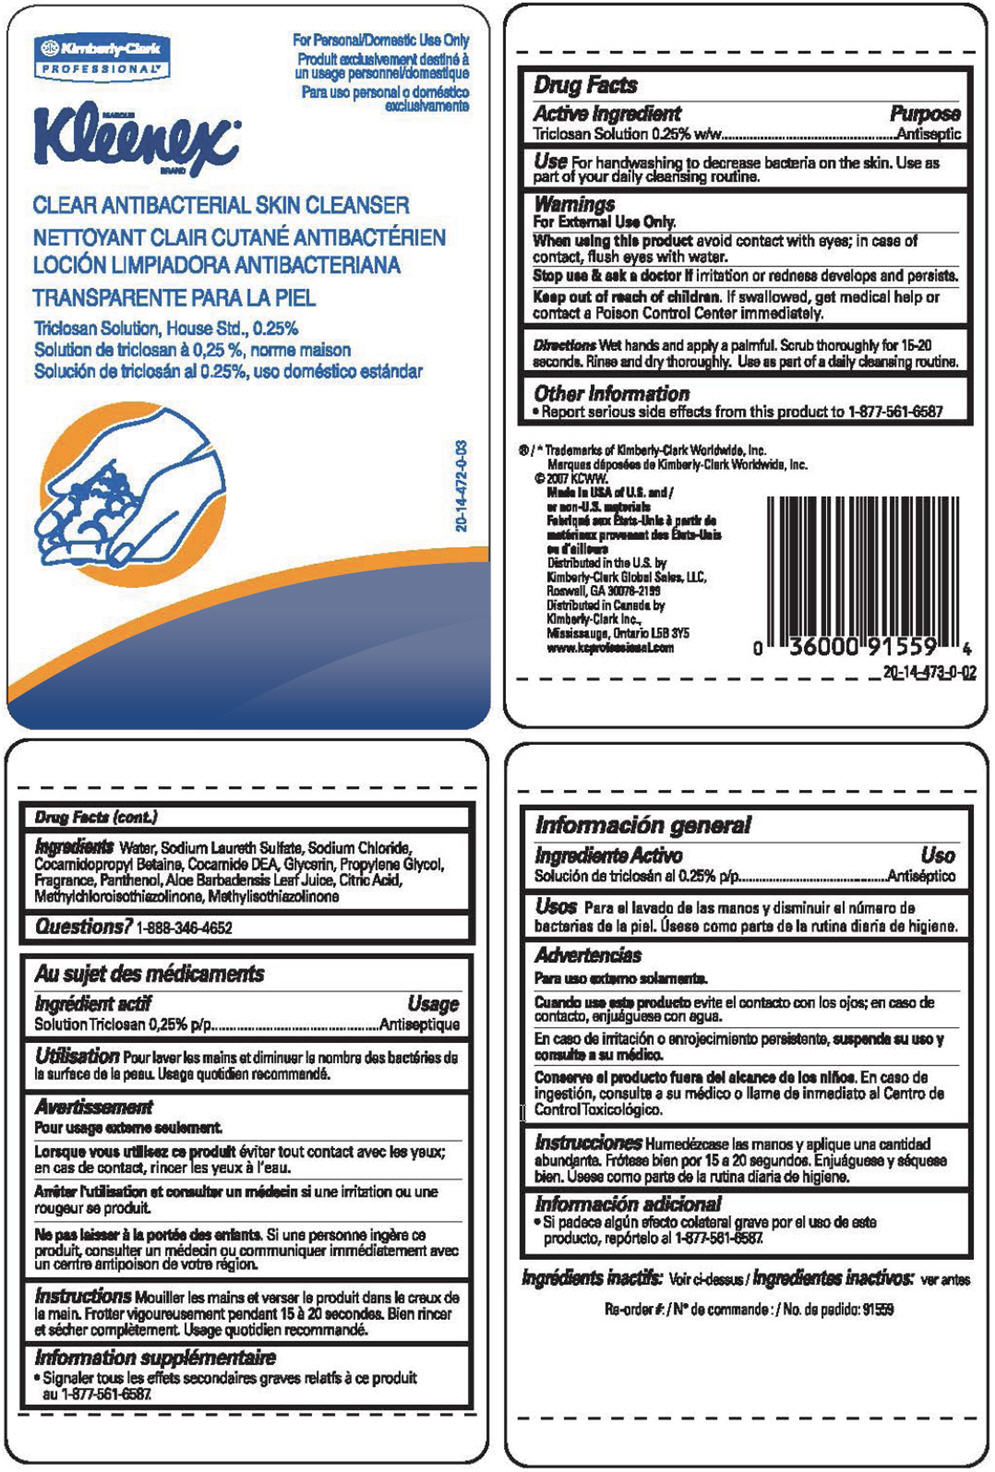 PRINCIPAL DISPLAY PANEL - Bottle Label